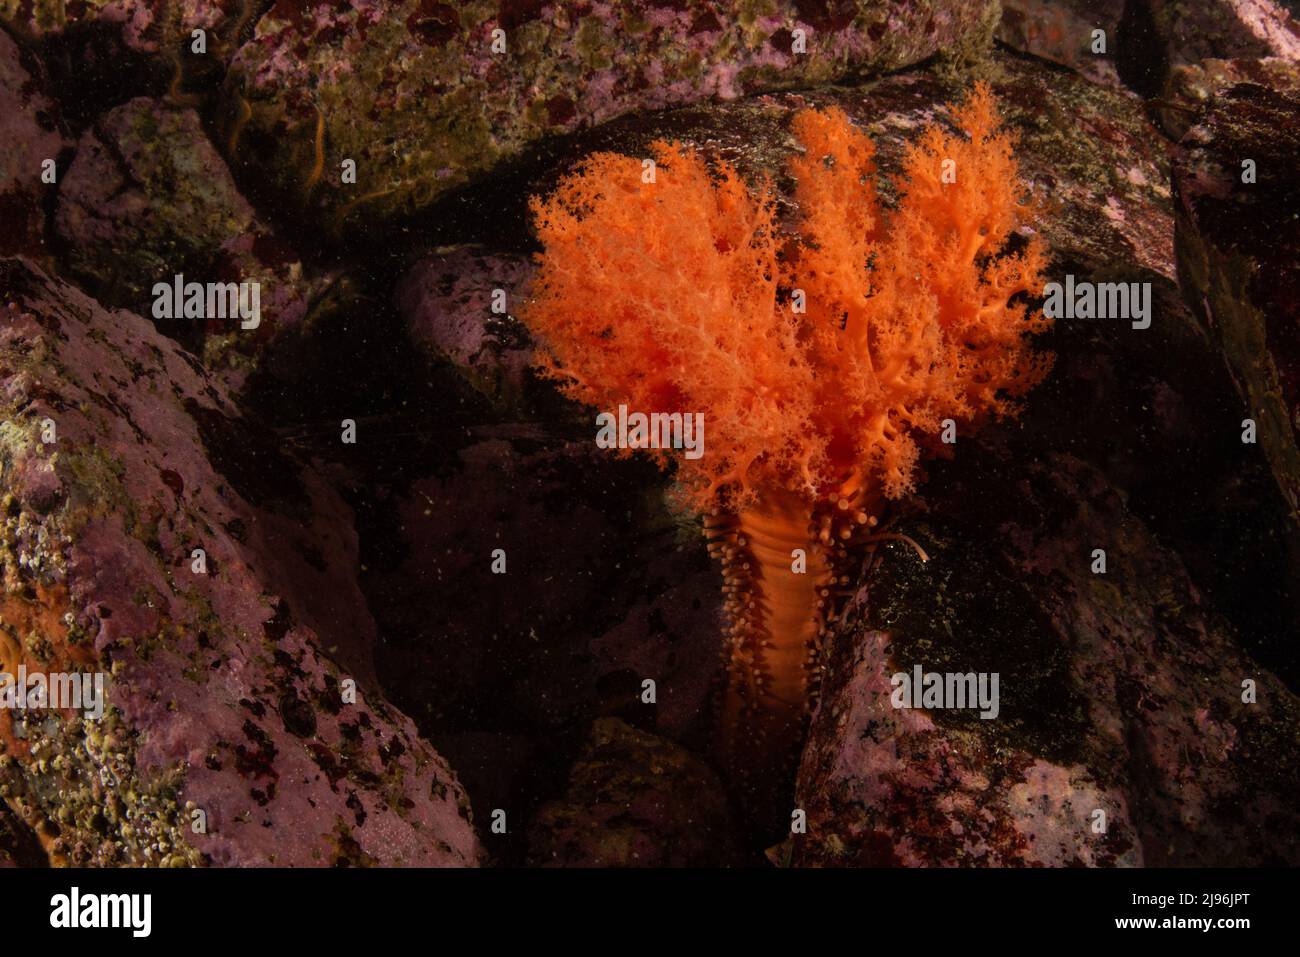 A filter feeding orange Sea Cucumber (Cucumaria miniata) on the Pacific ocean floor in Monterey Bay, California, North America. Stock Photo